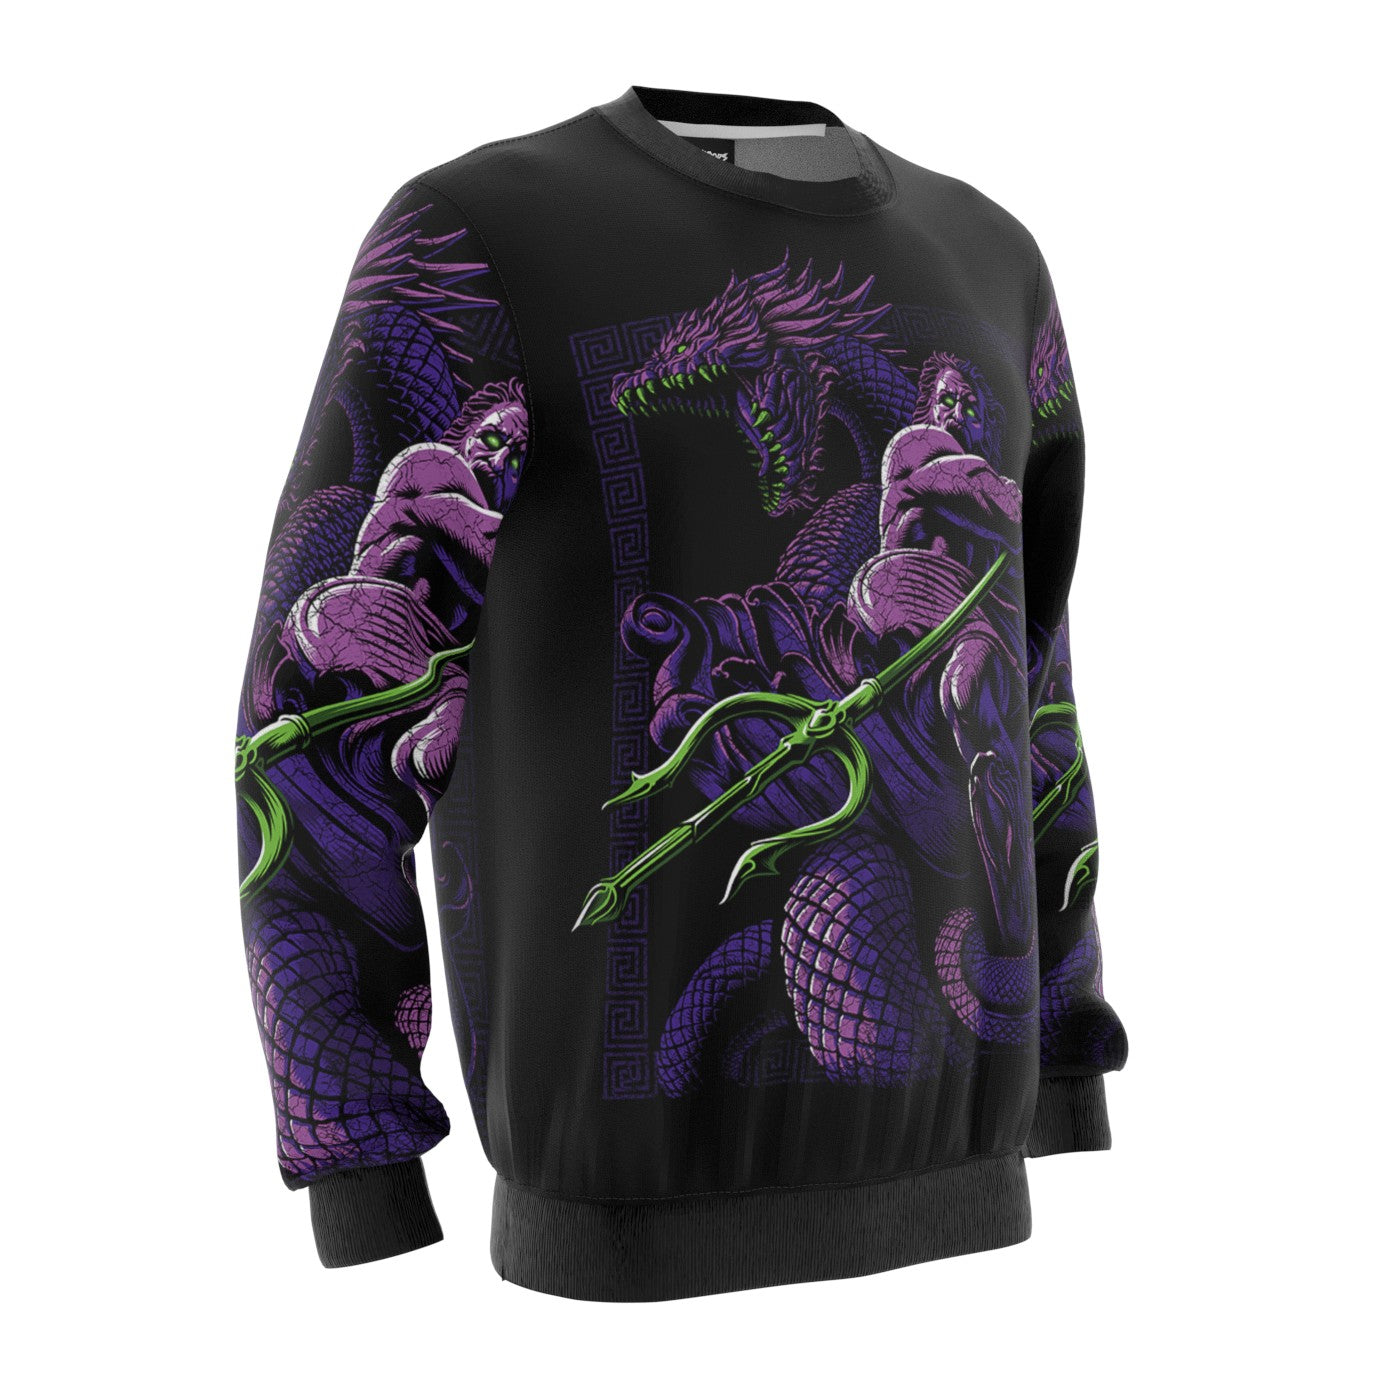 Poseidon Dragon Sweatshirt